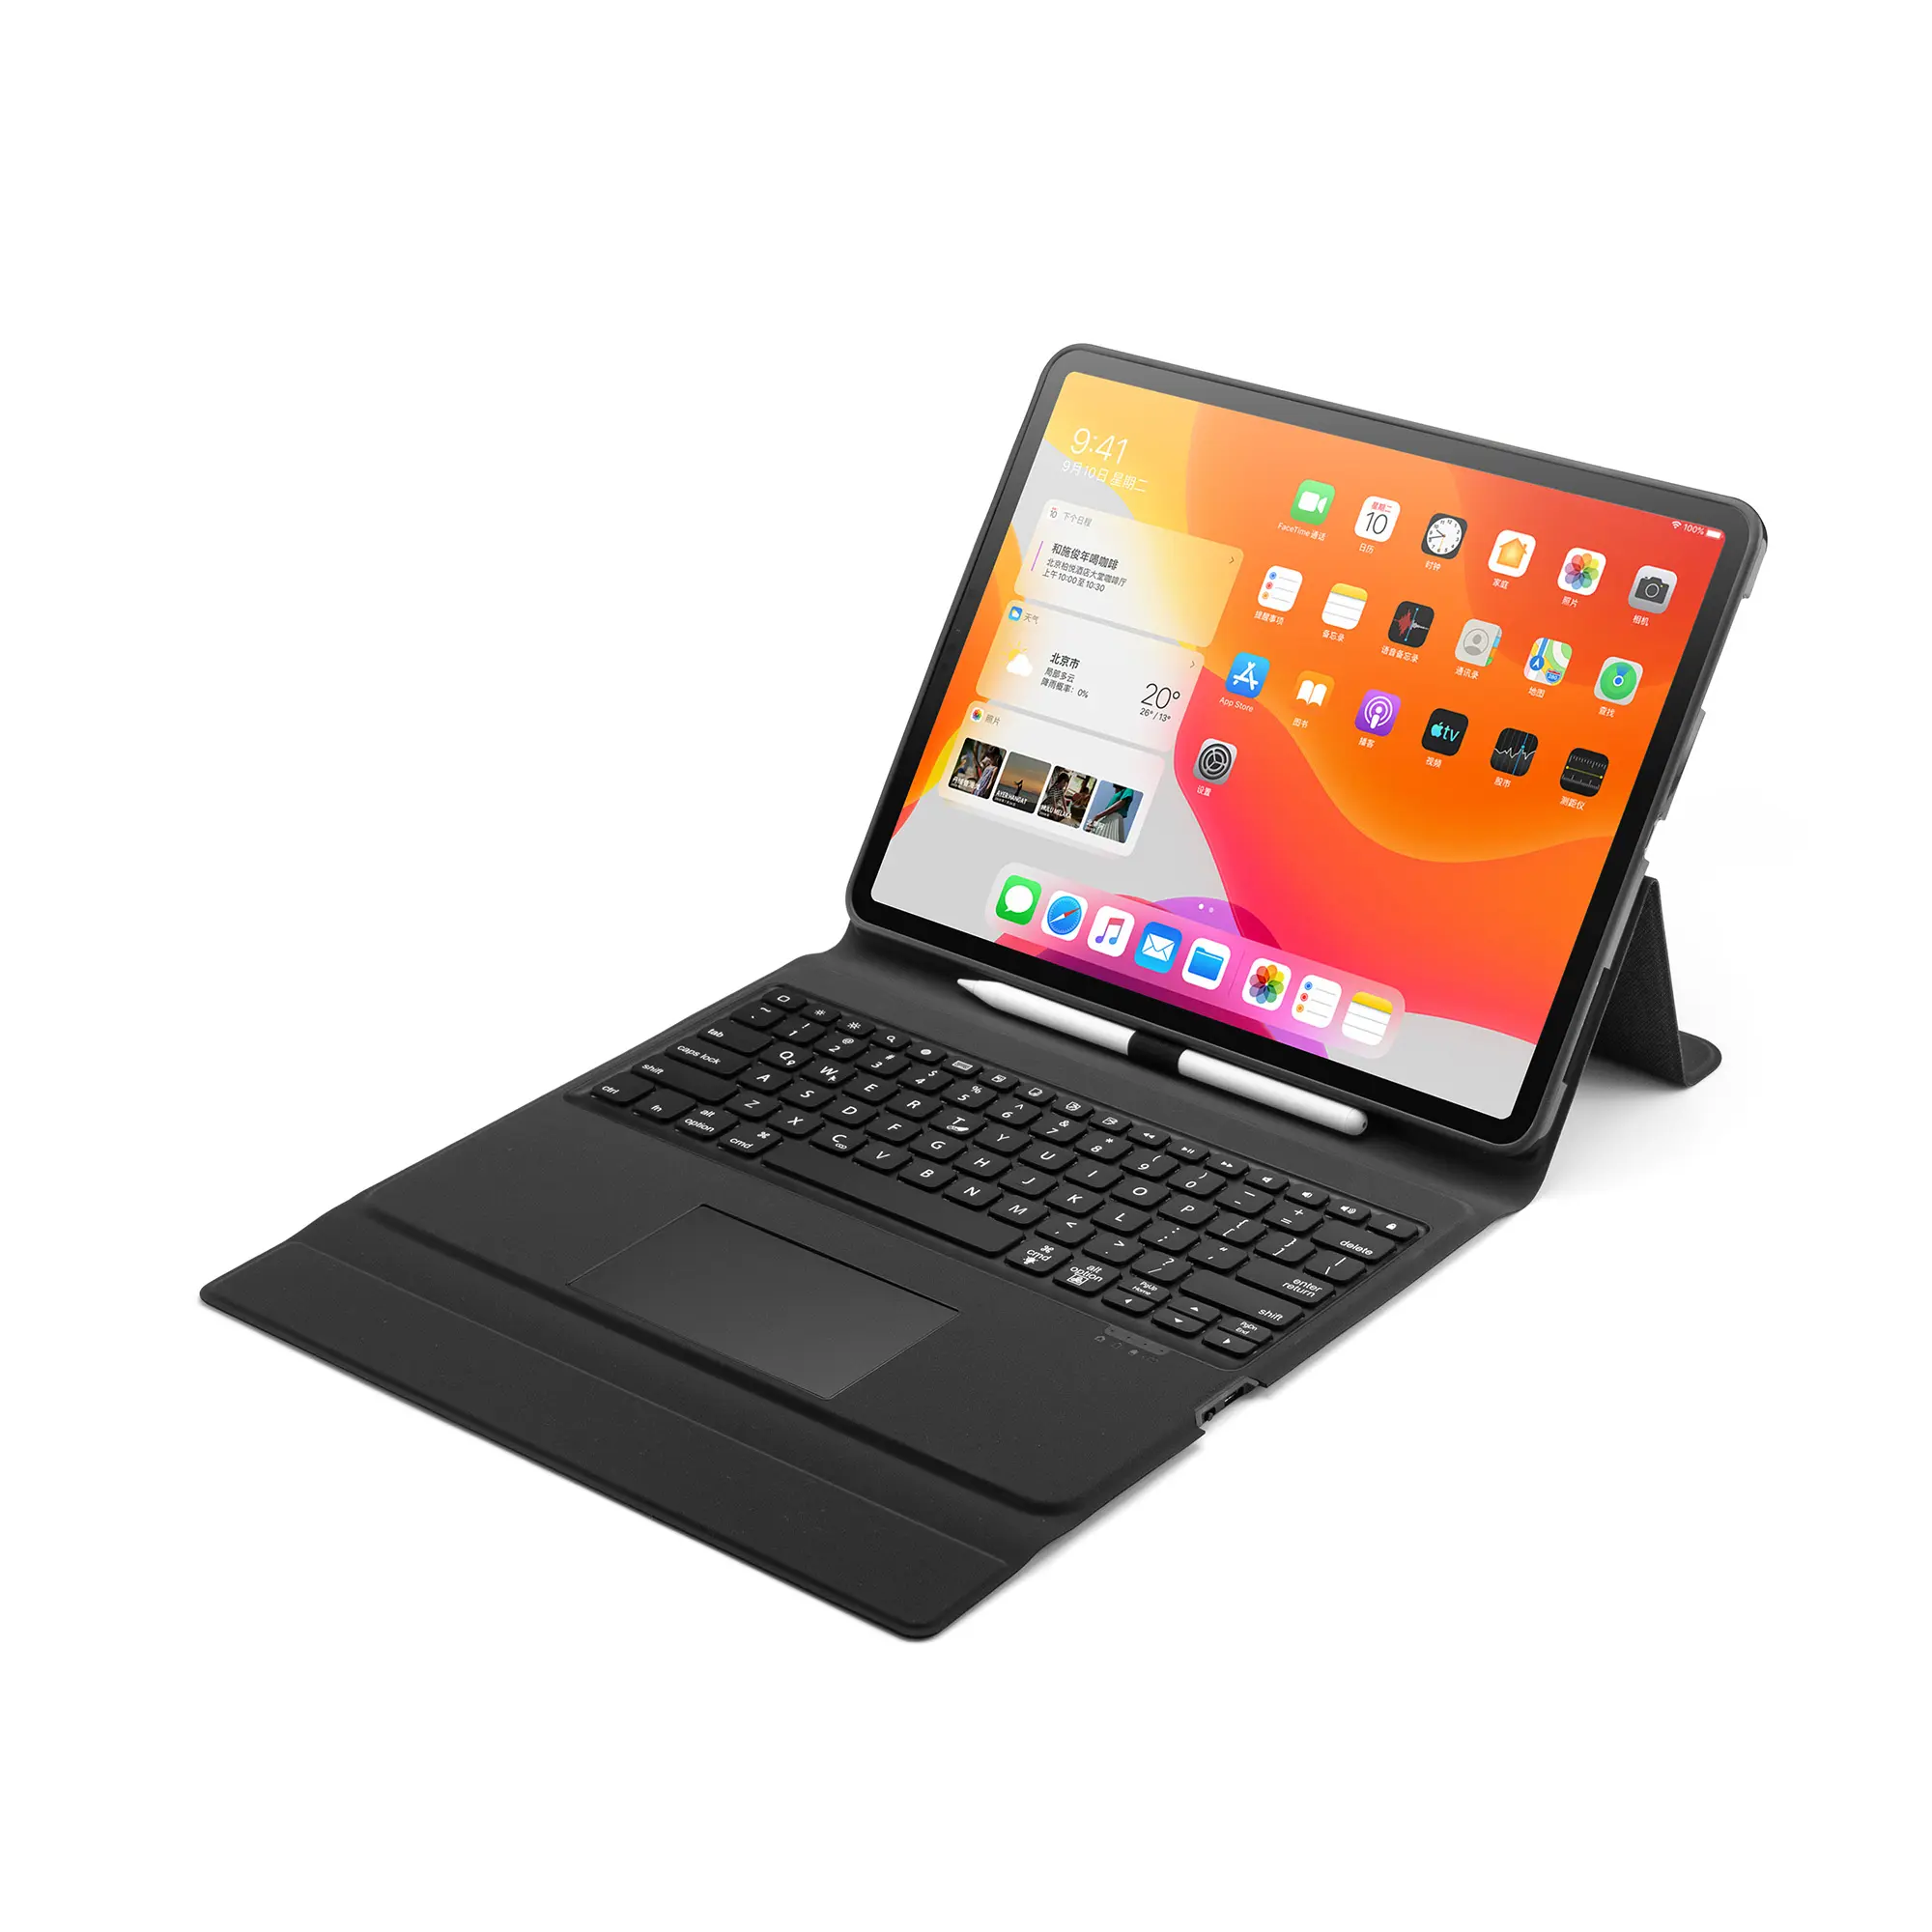 Penutup Keyboard untuk iPad 10.2/10.5/12.9 Inci dengan Casing Keyboard Nirkabel BT untuk Casing Pelindung Keyboard Ipad dengan Touchpad